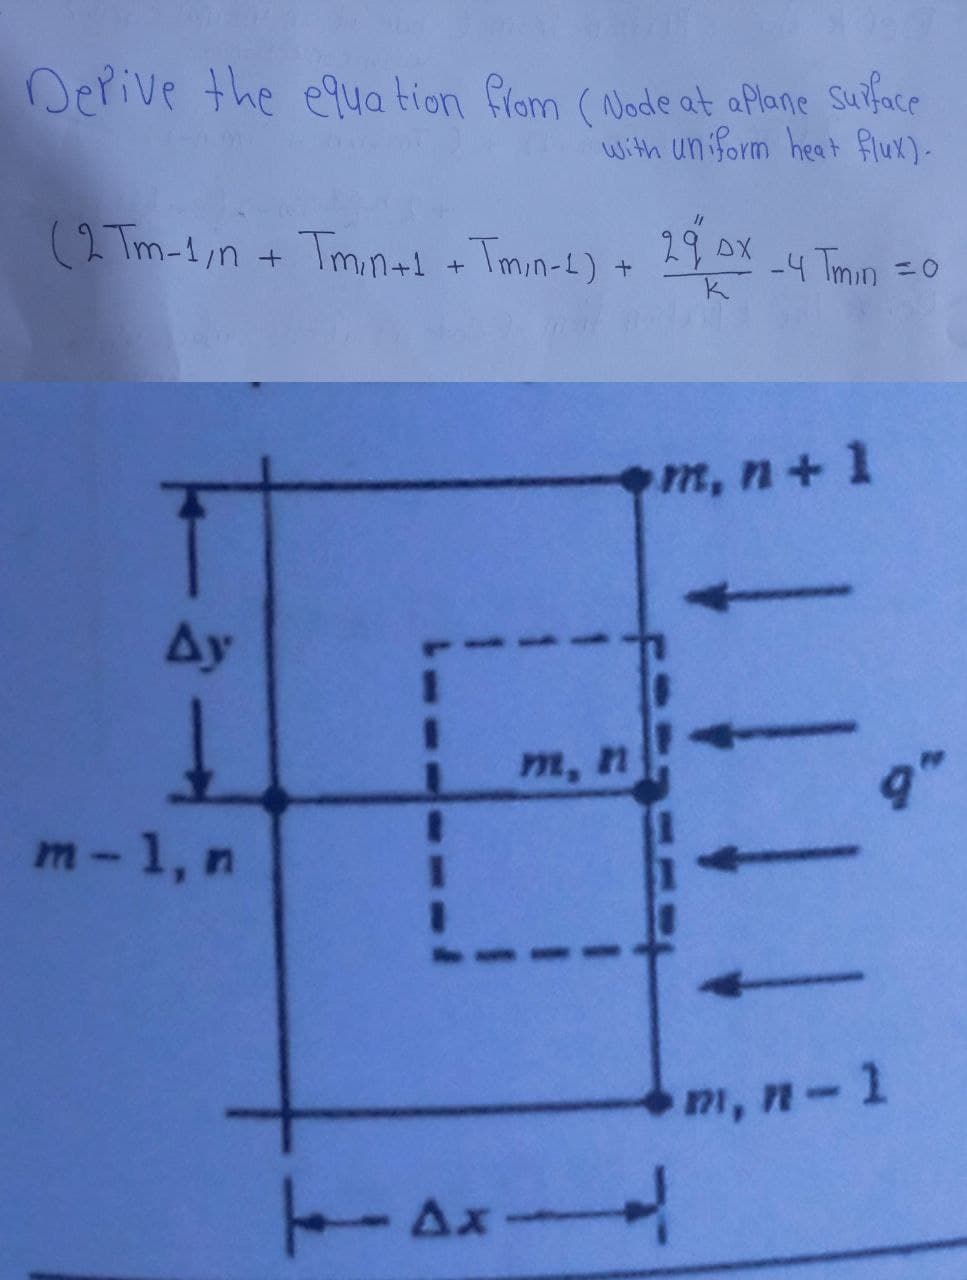 Derive the equation from (Node at aplane surface
with uniform heat flux)-
11
(2 Tm-1/n + Tmin+1 +Tm/n-1) + 29/0x -4 Tmin=0
Ay
m-1, n
1
I
Tax
m, n
m, n + 1
111
94
m, n-1